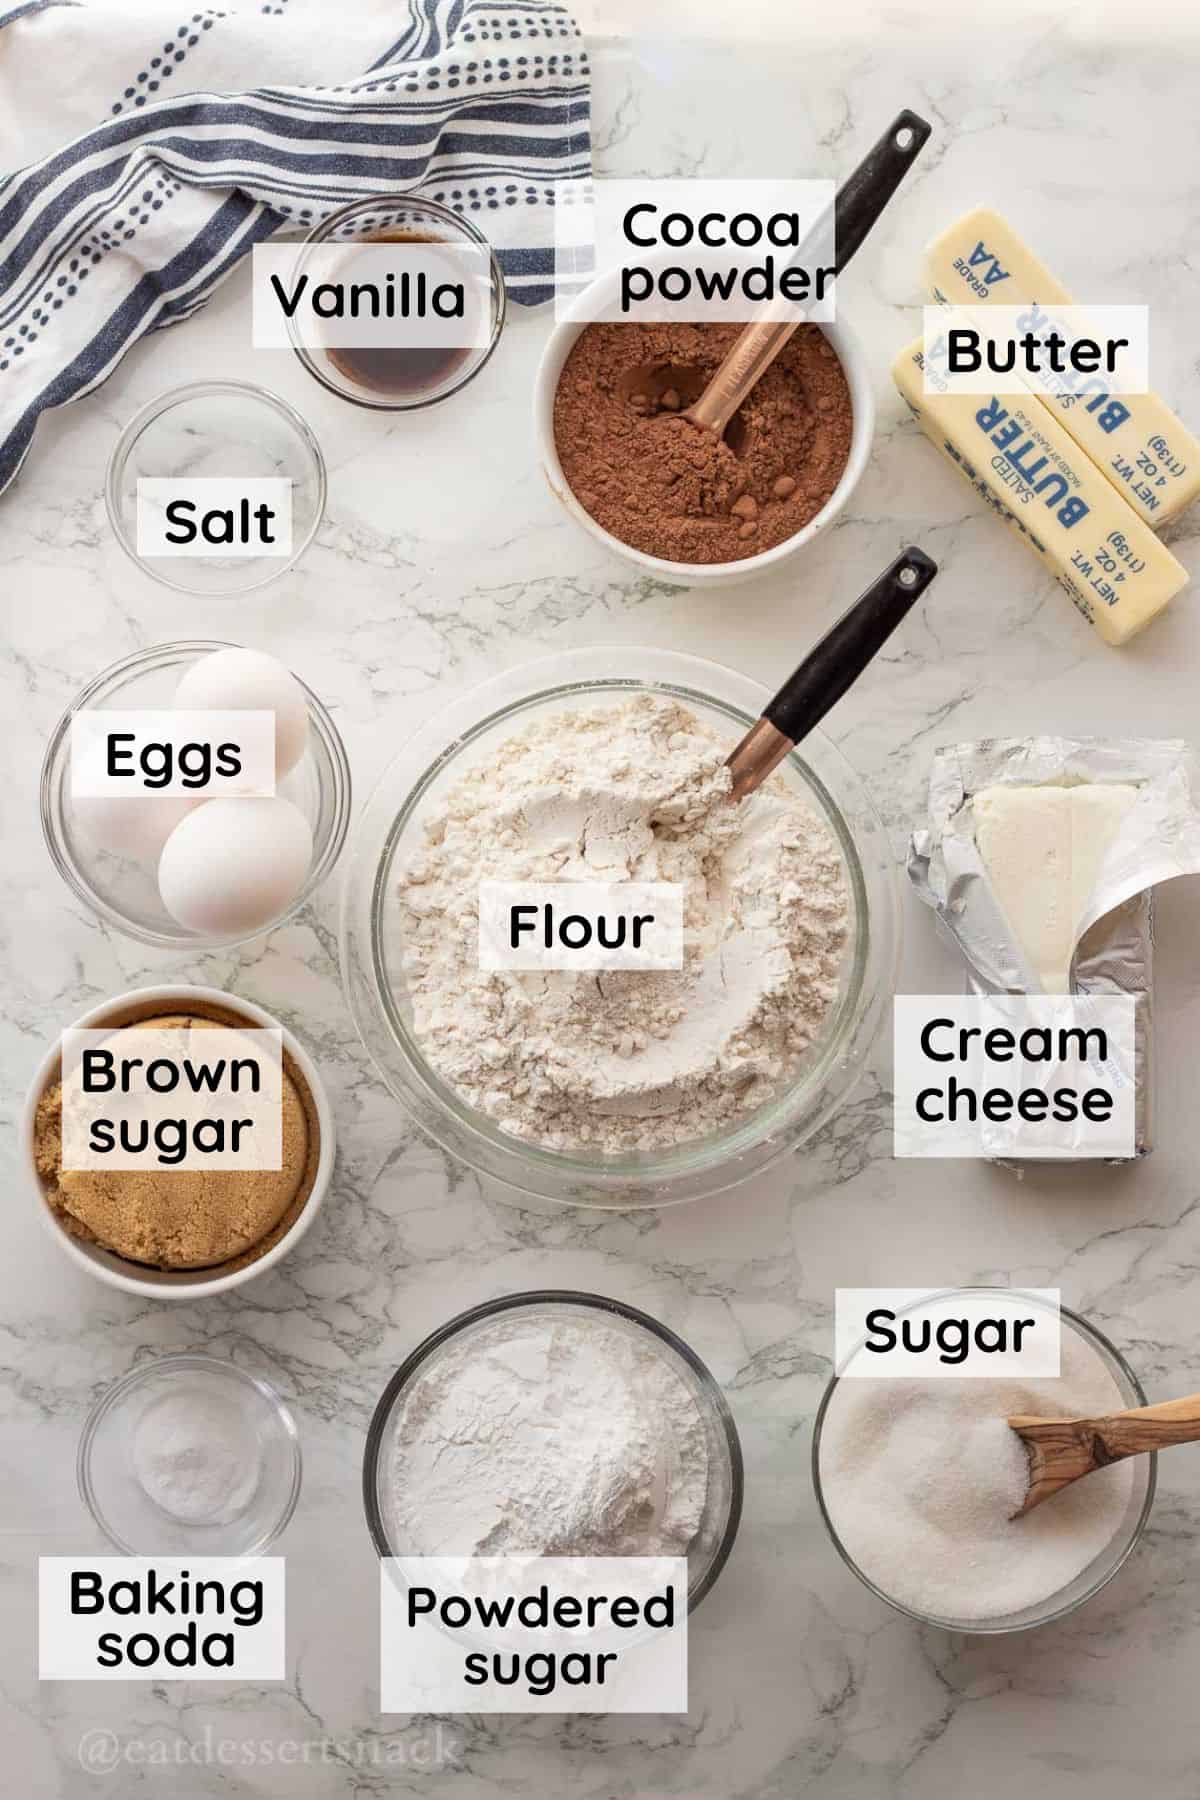 Cocoa powder, butter, vanilla, eggs, salt, cream cheese, sugar, baking soda, brown sugar, and flour in glass bowls on marble countertop.